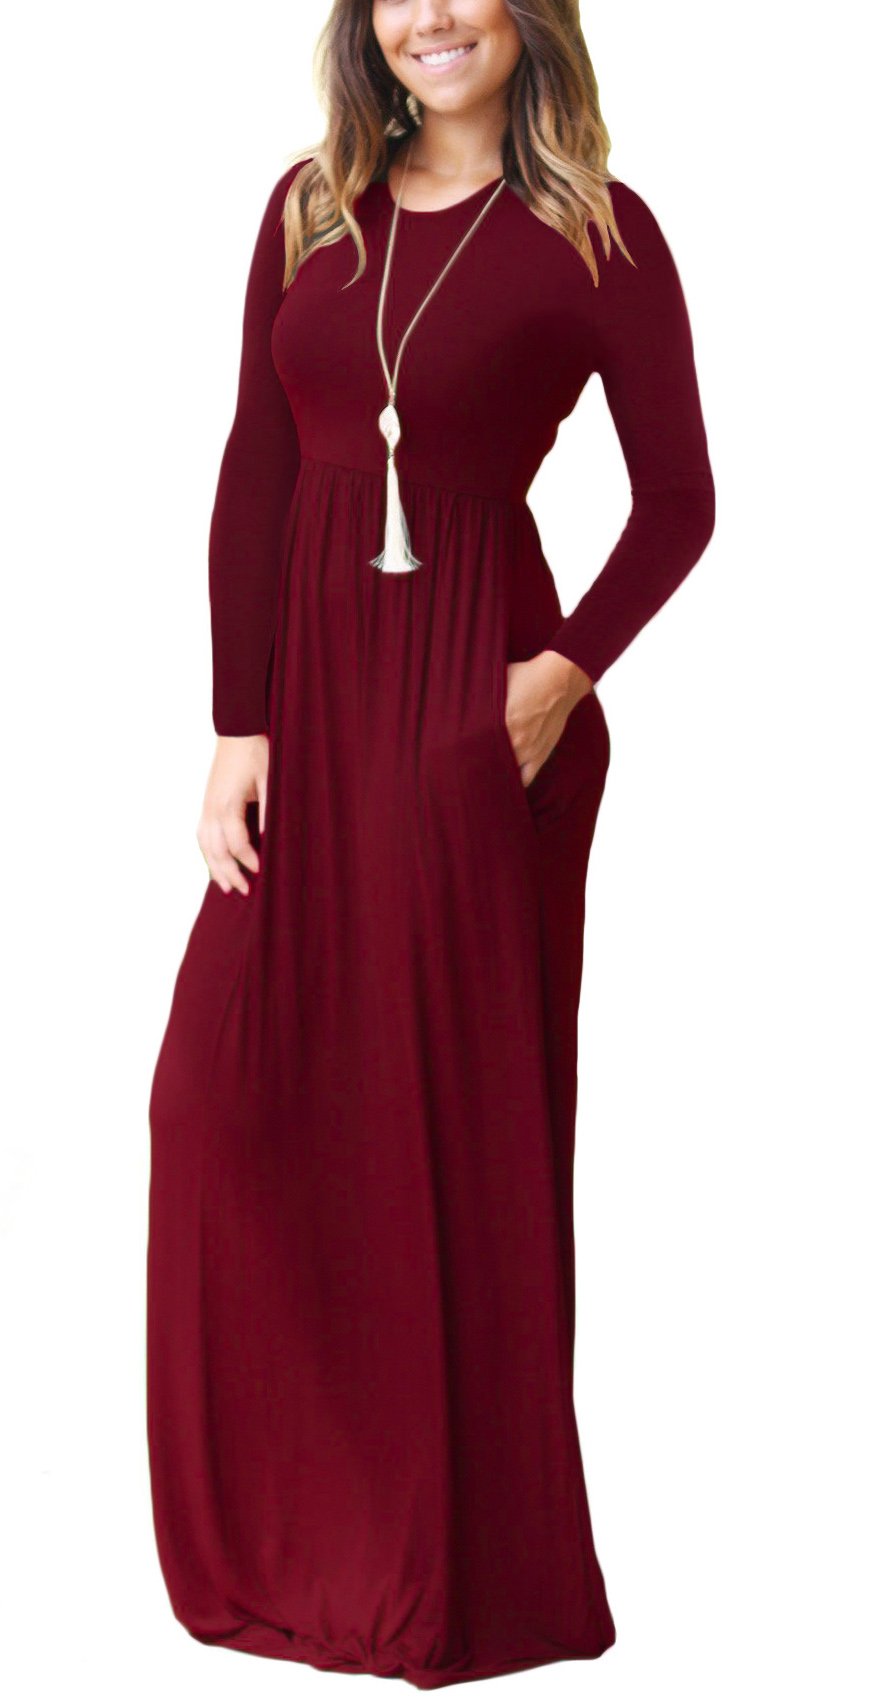 DEARCASE Women's Long Sleeve Maxi Dress Crewneck Loose Plain Casual Empire Waist Long Dresses with Pockets